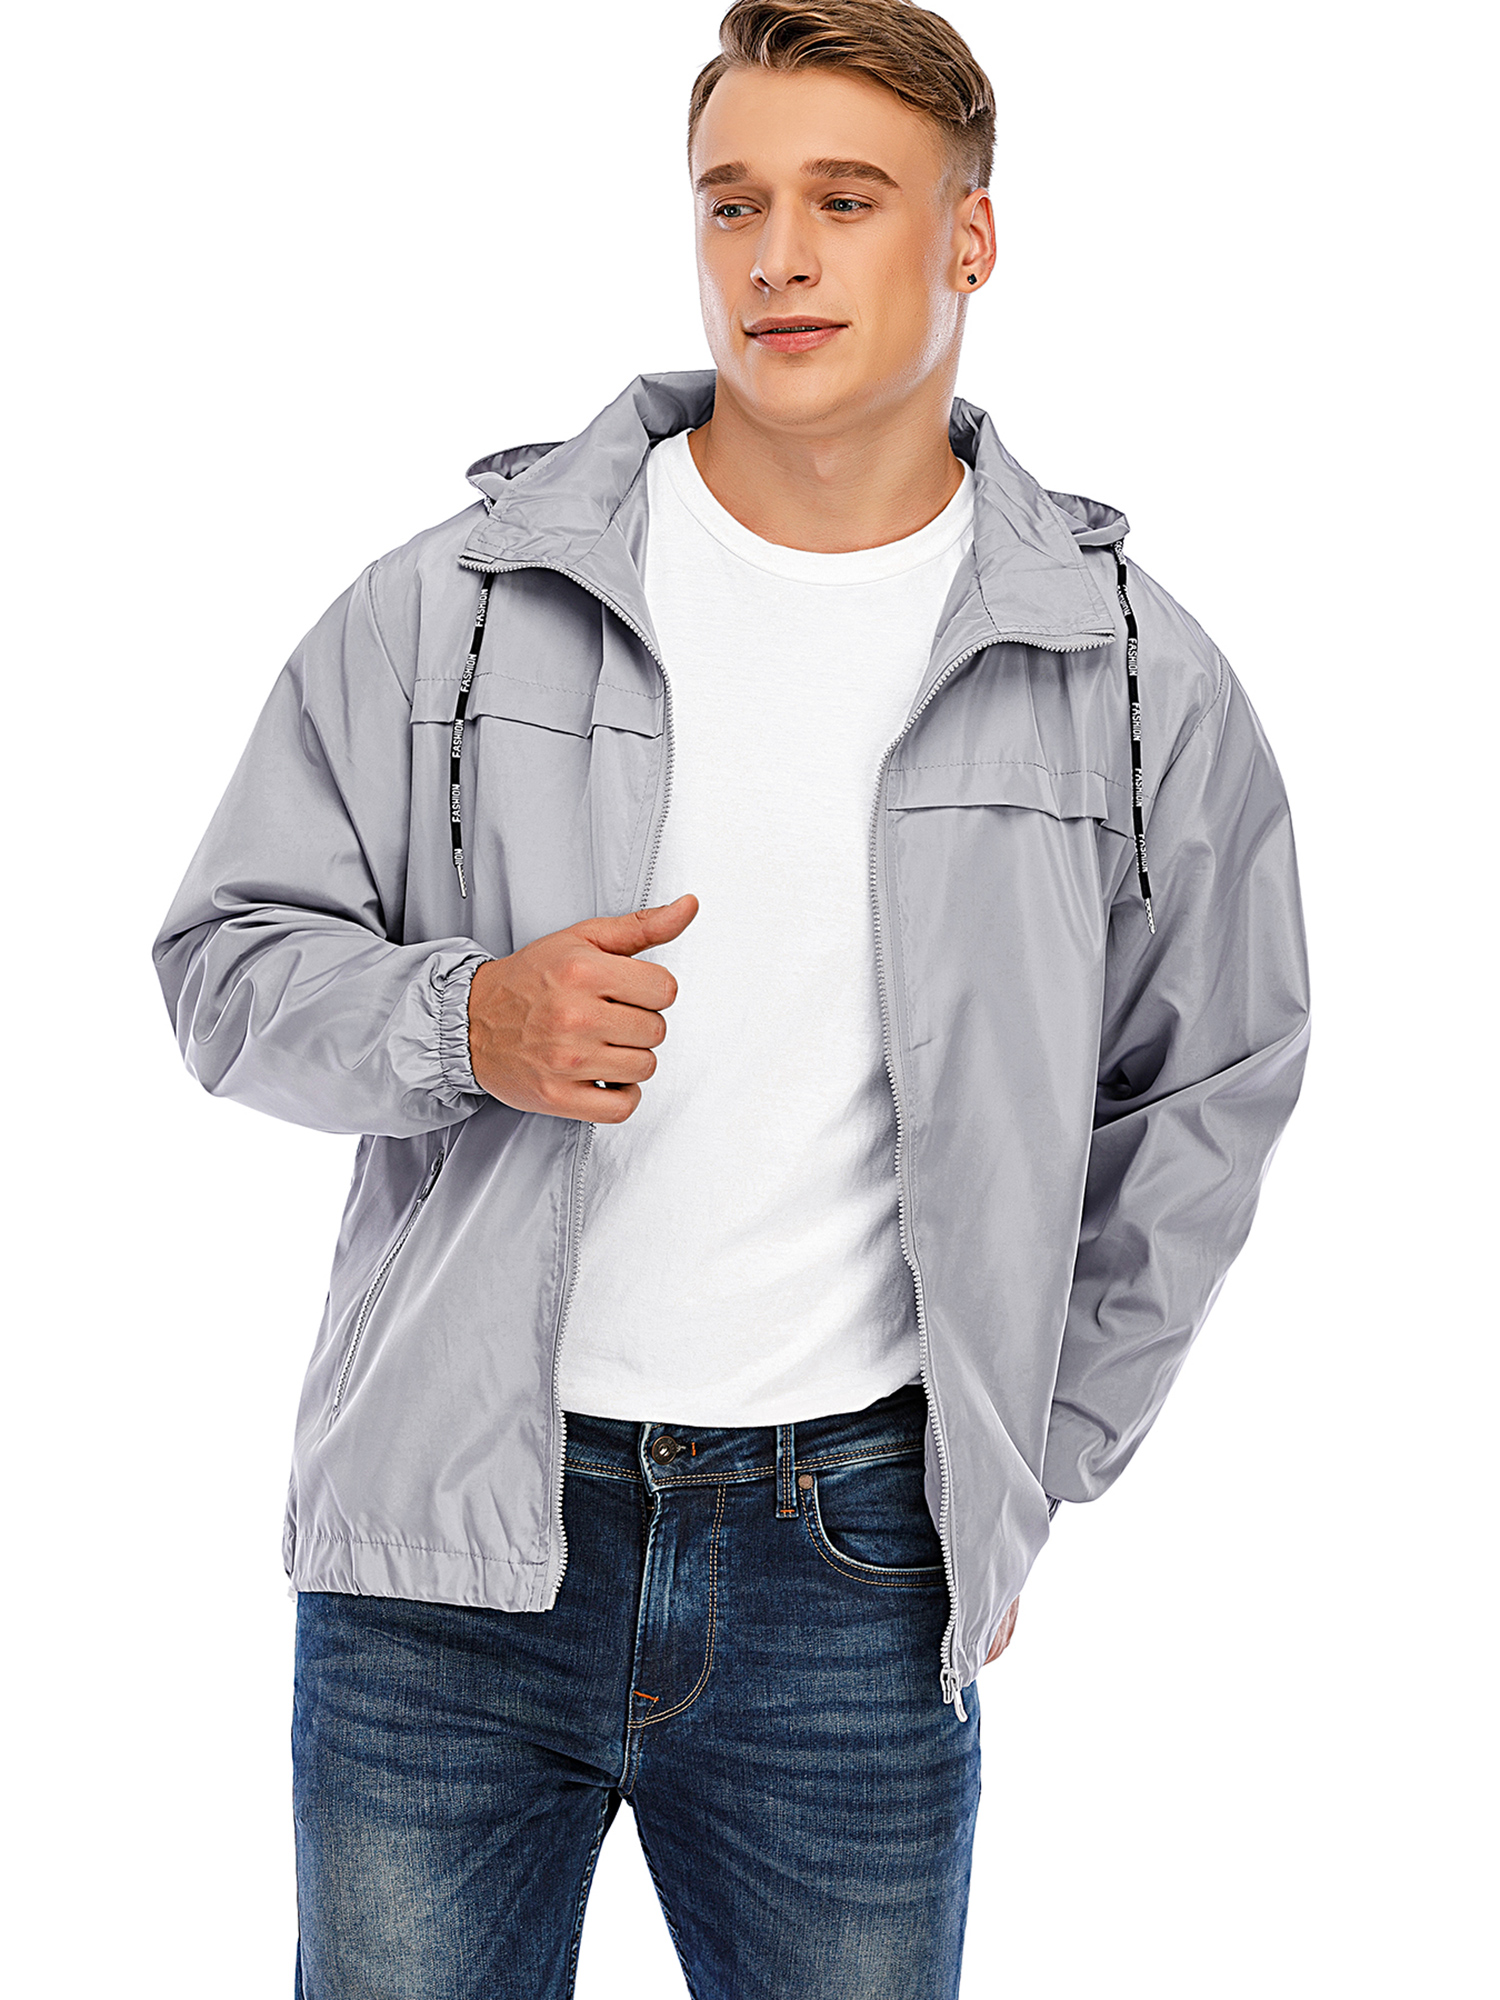 Men's Packable Rain Jacket Outdoor Waterproof Hooded Lightweight Classic Cycling Raincoat Comfortable Casual Windbreaker Rain Jacket - image 4 of 8